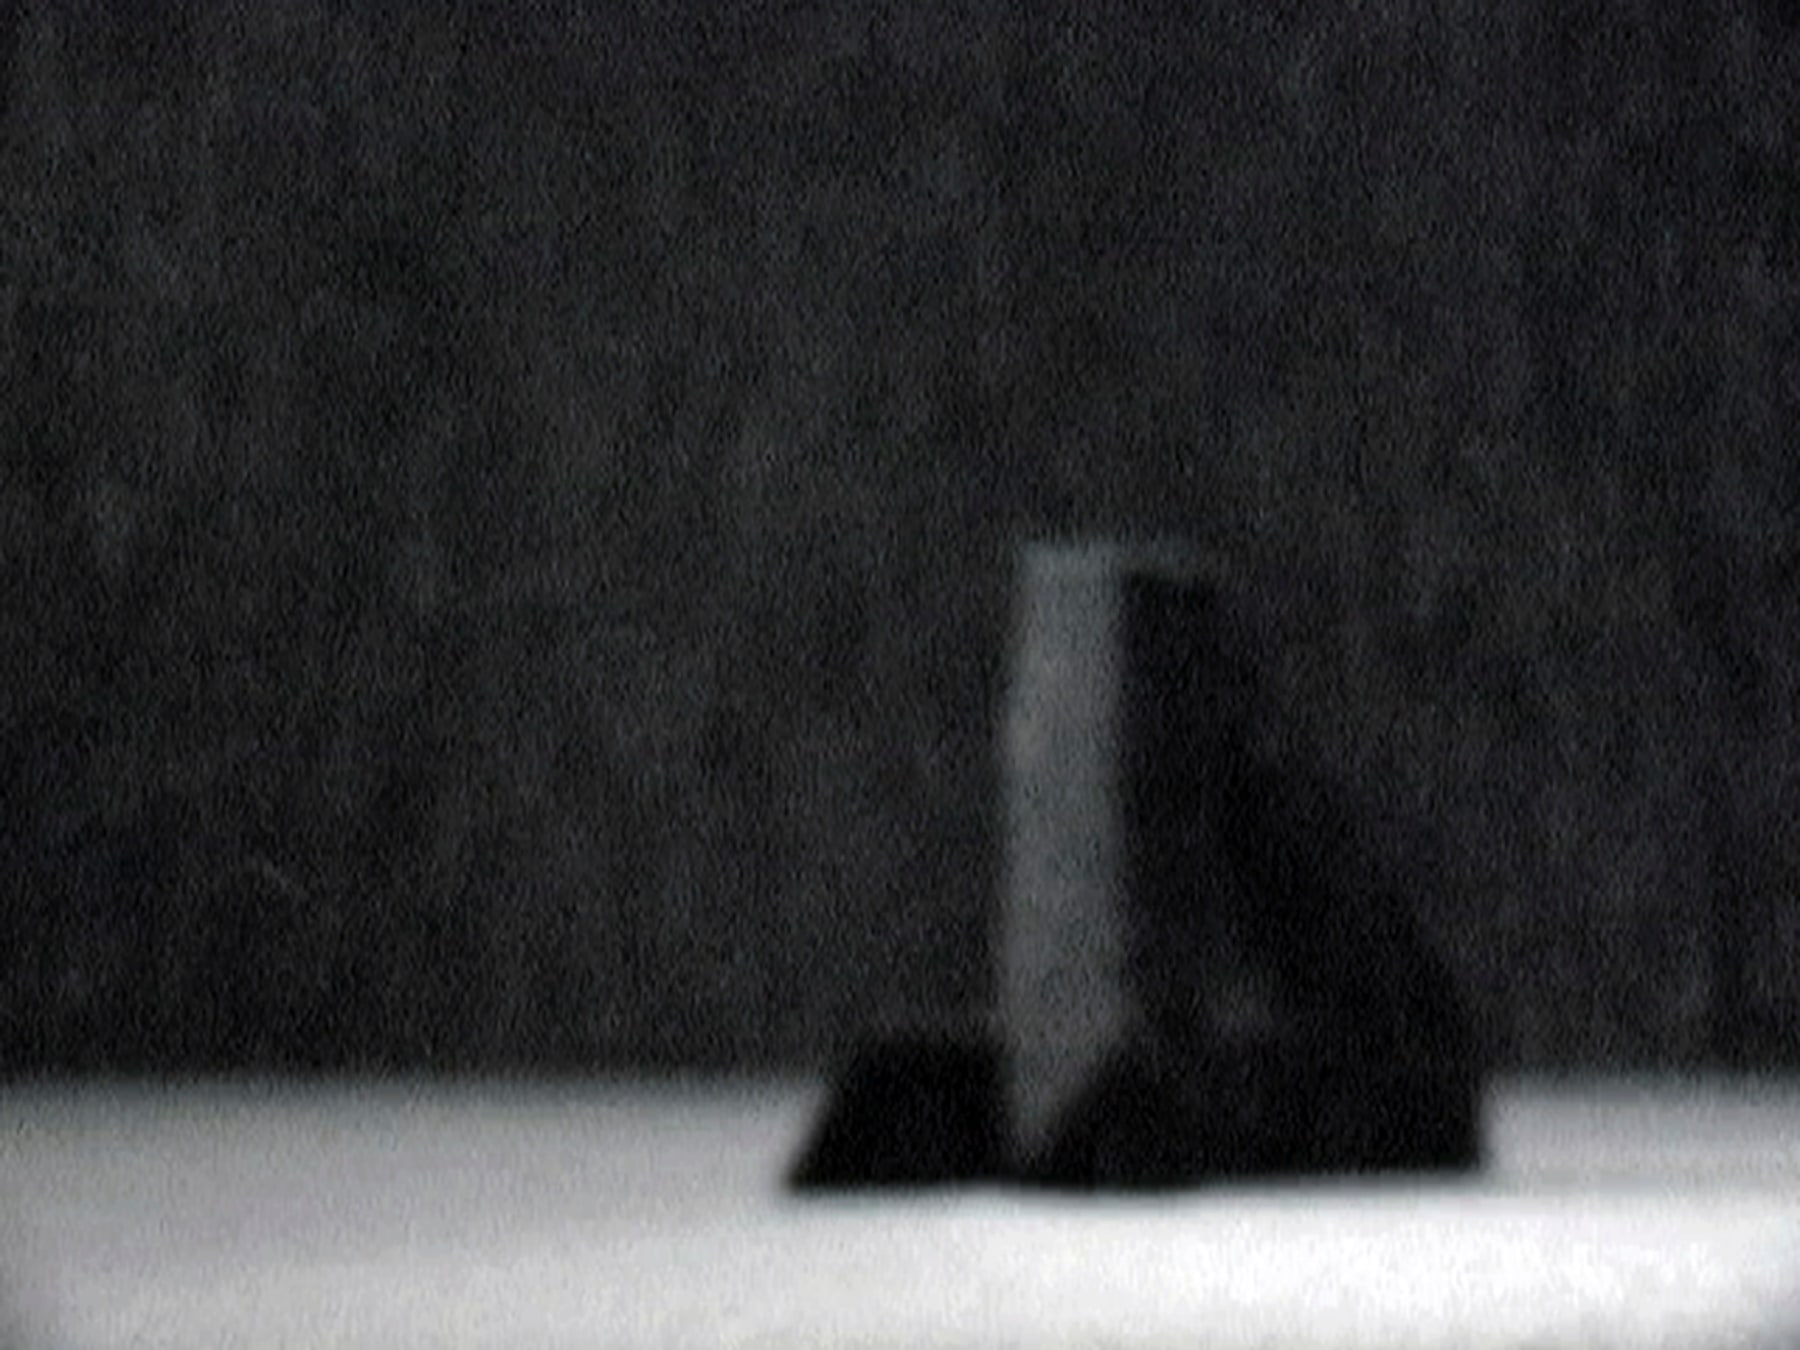 Erin Shirreff,&amp;nbsp;Sculpture Park (Tony Smith), 2006, color video, silent, 37 minute loop (stills).